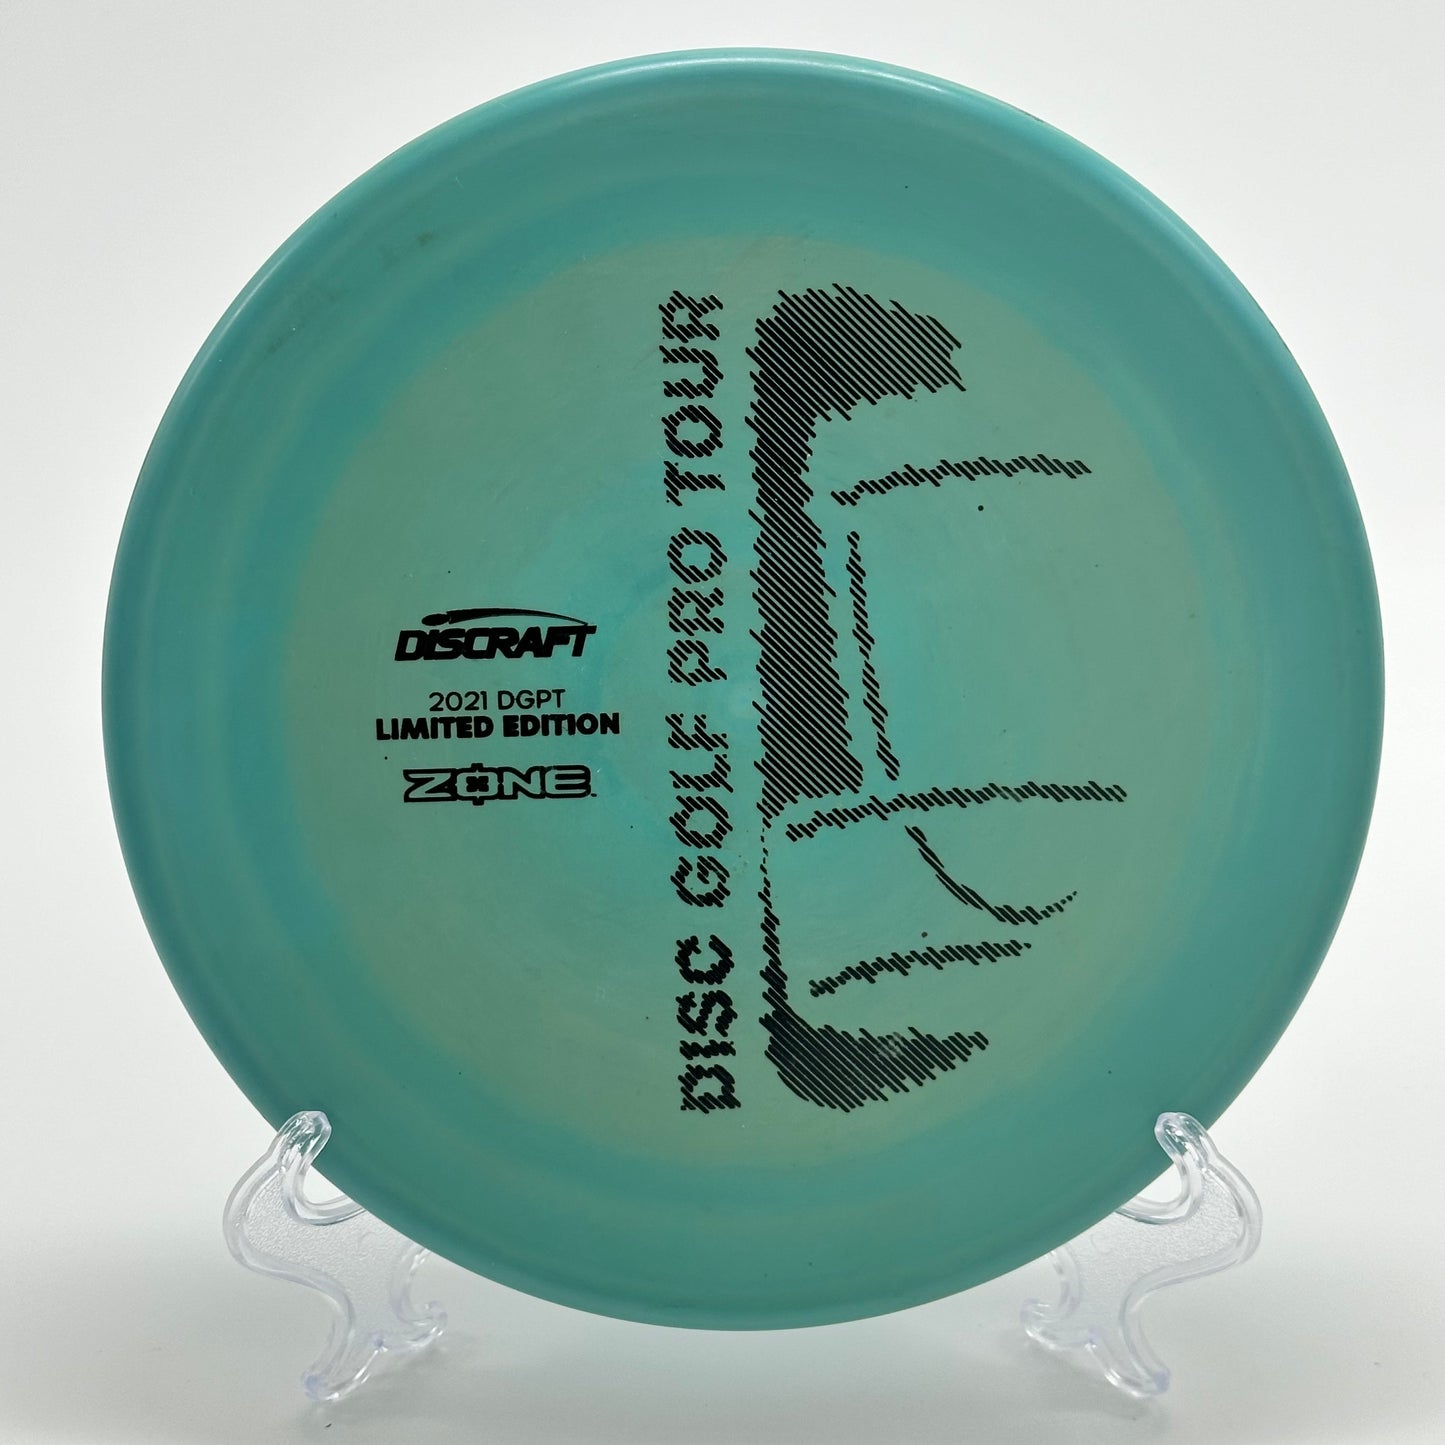 Discraft Zone | ESP 2021 DGPT Limited Edition